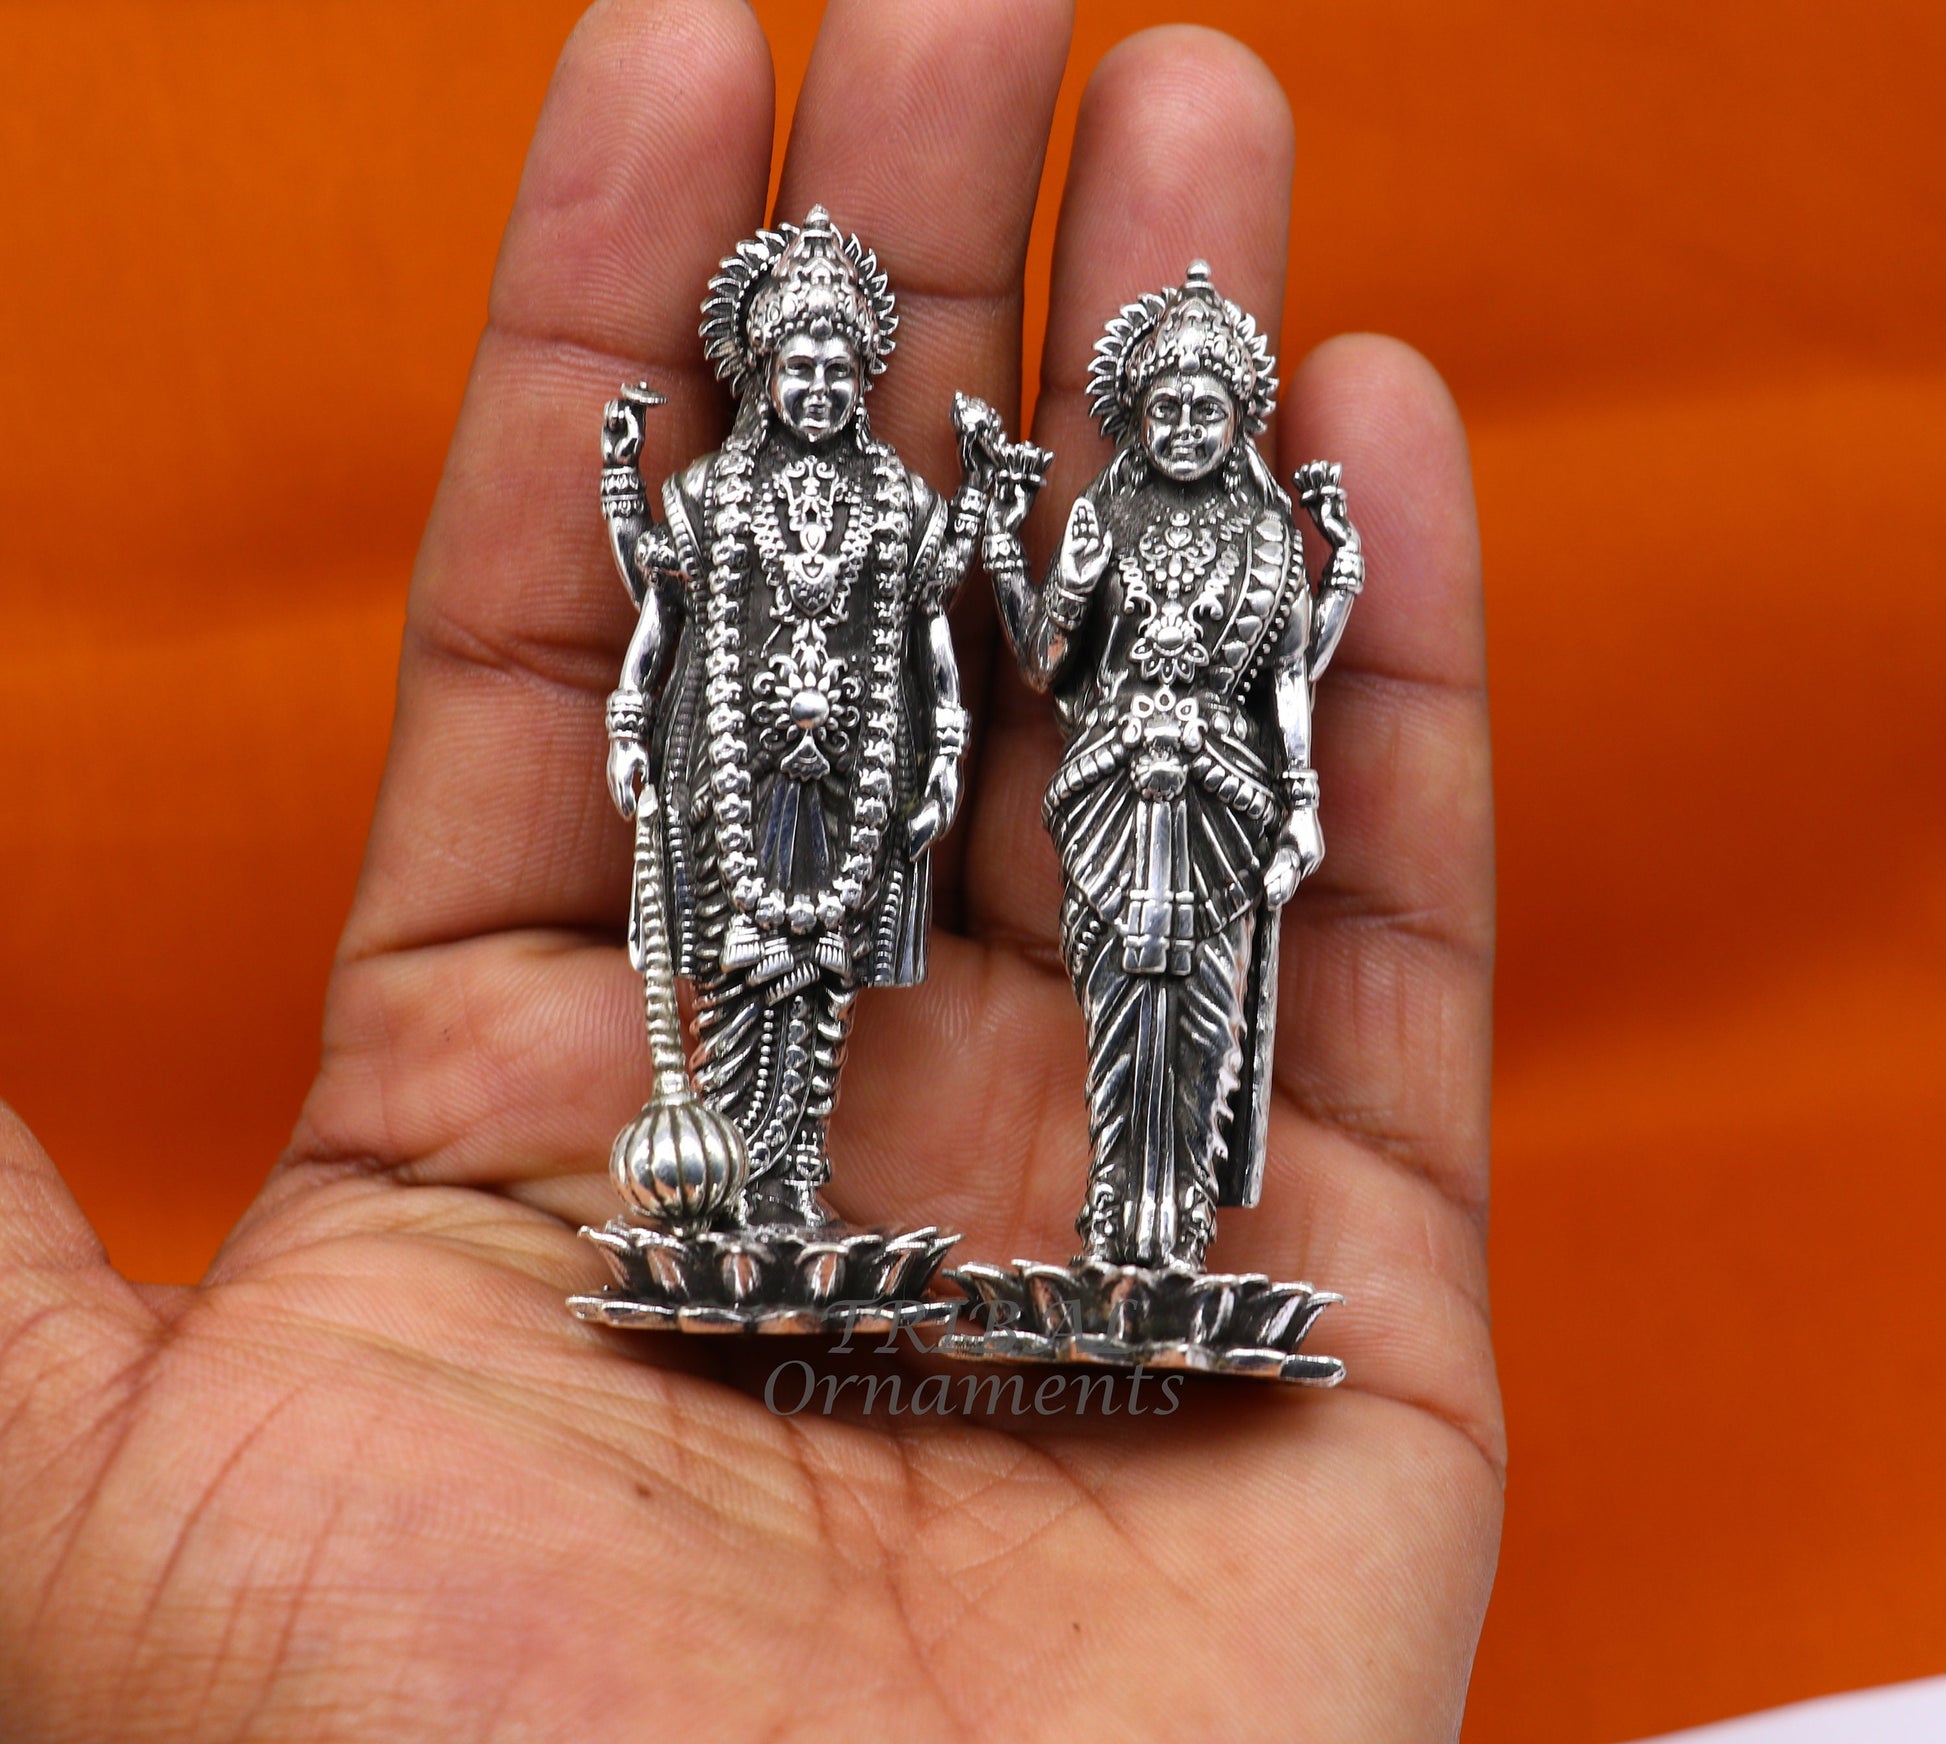 925 Sterling silver handmade lord Laxmi Narayanan, Goddess Laxmi and Vishnu standing Statue figurine, puja articles art574 - TRIBAL ORNAMENTS